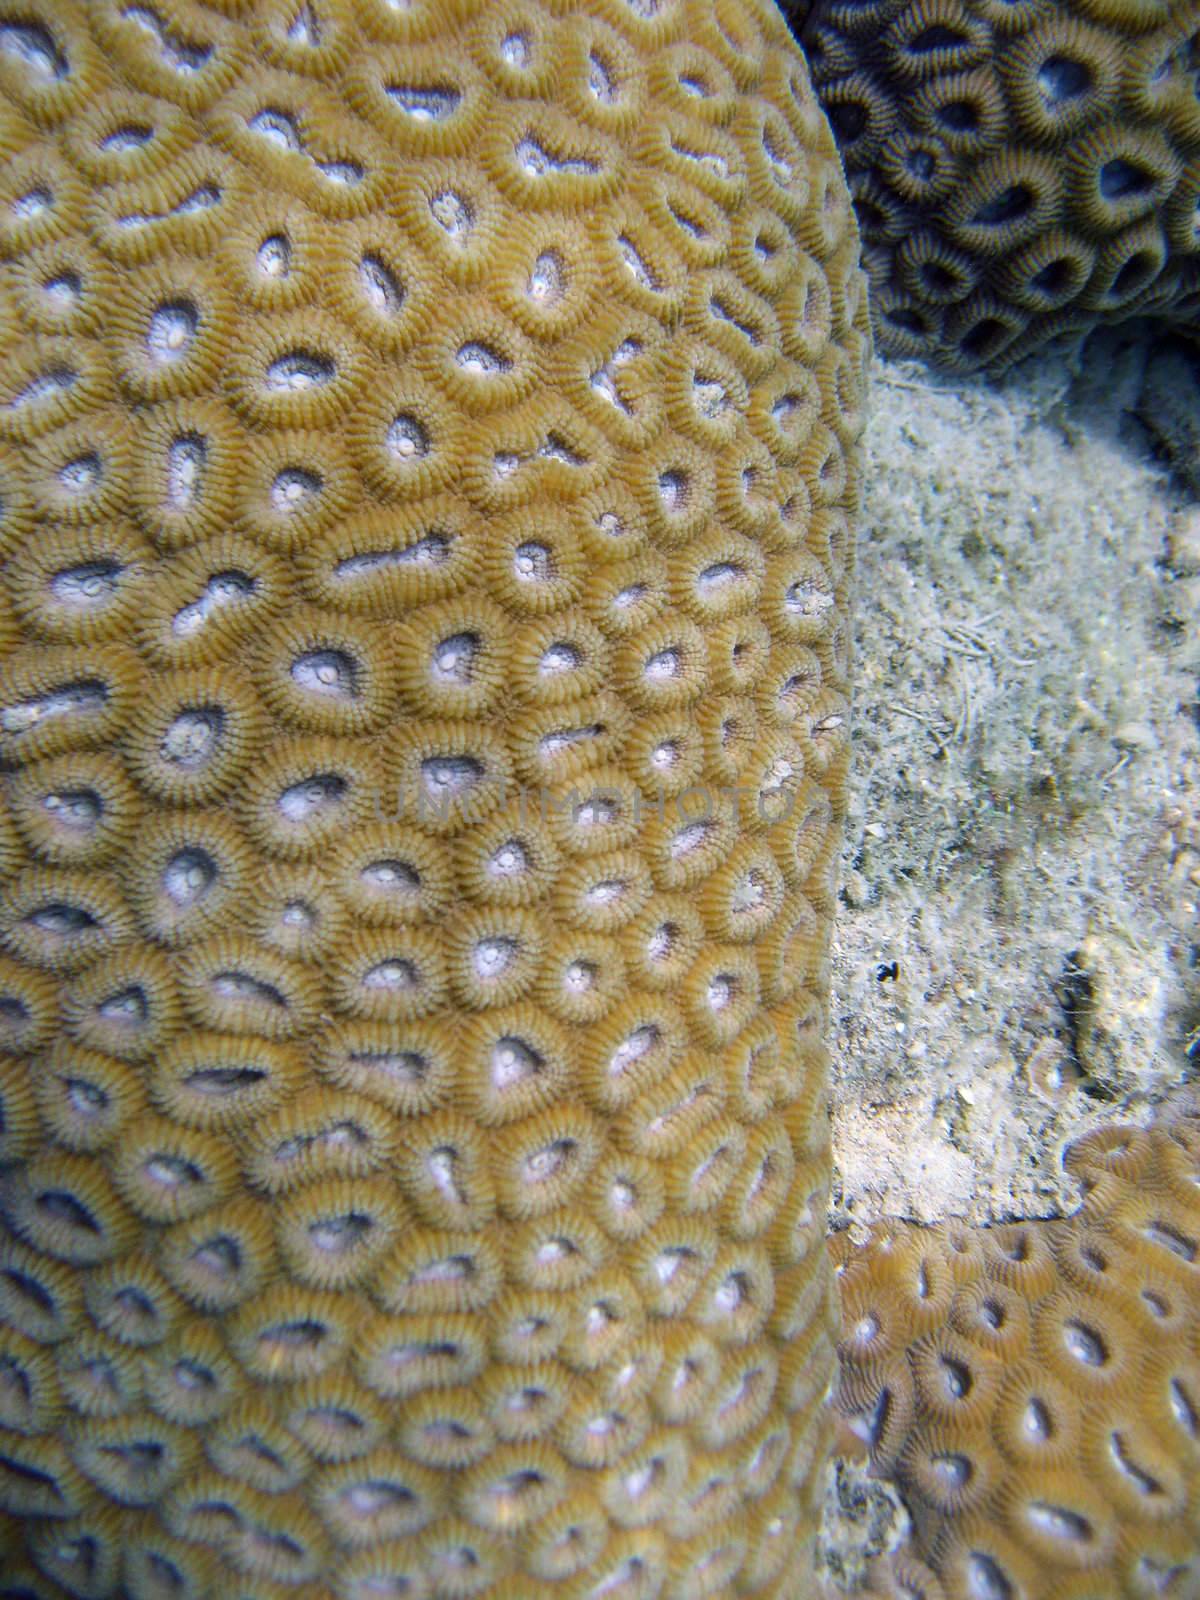 Underwater Life of Great Barrier Reef by jovannig